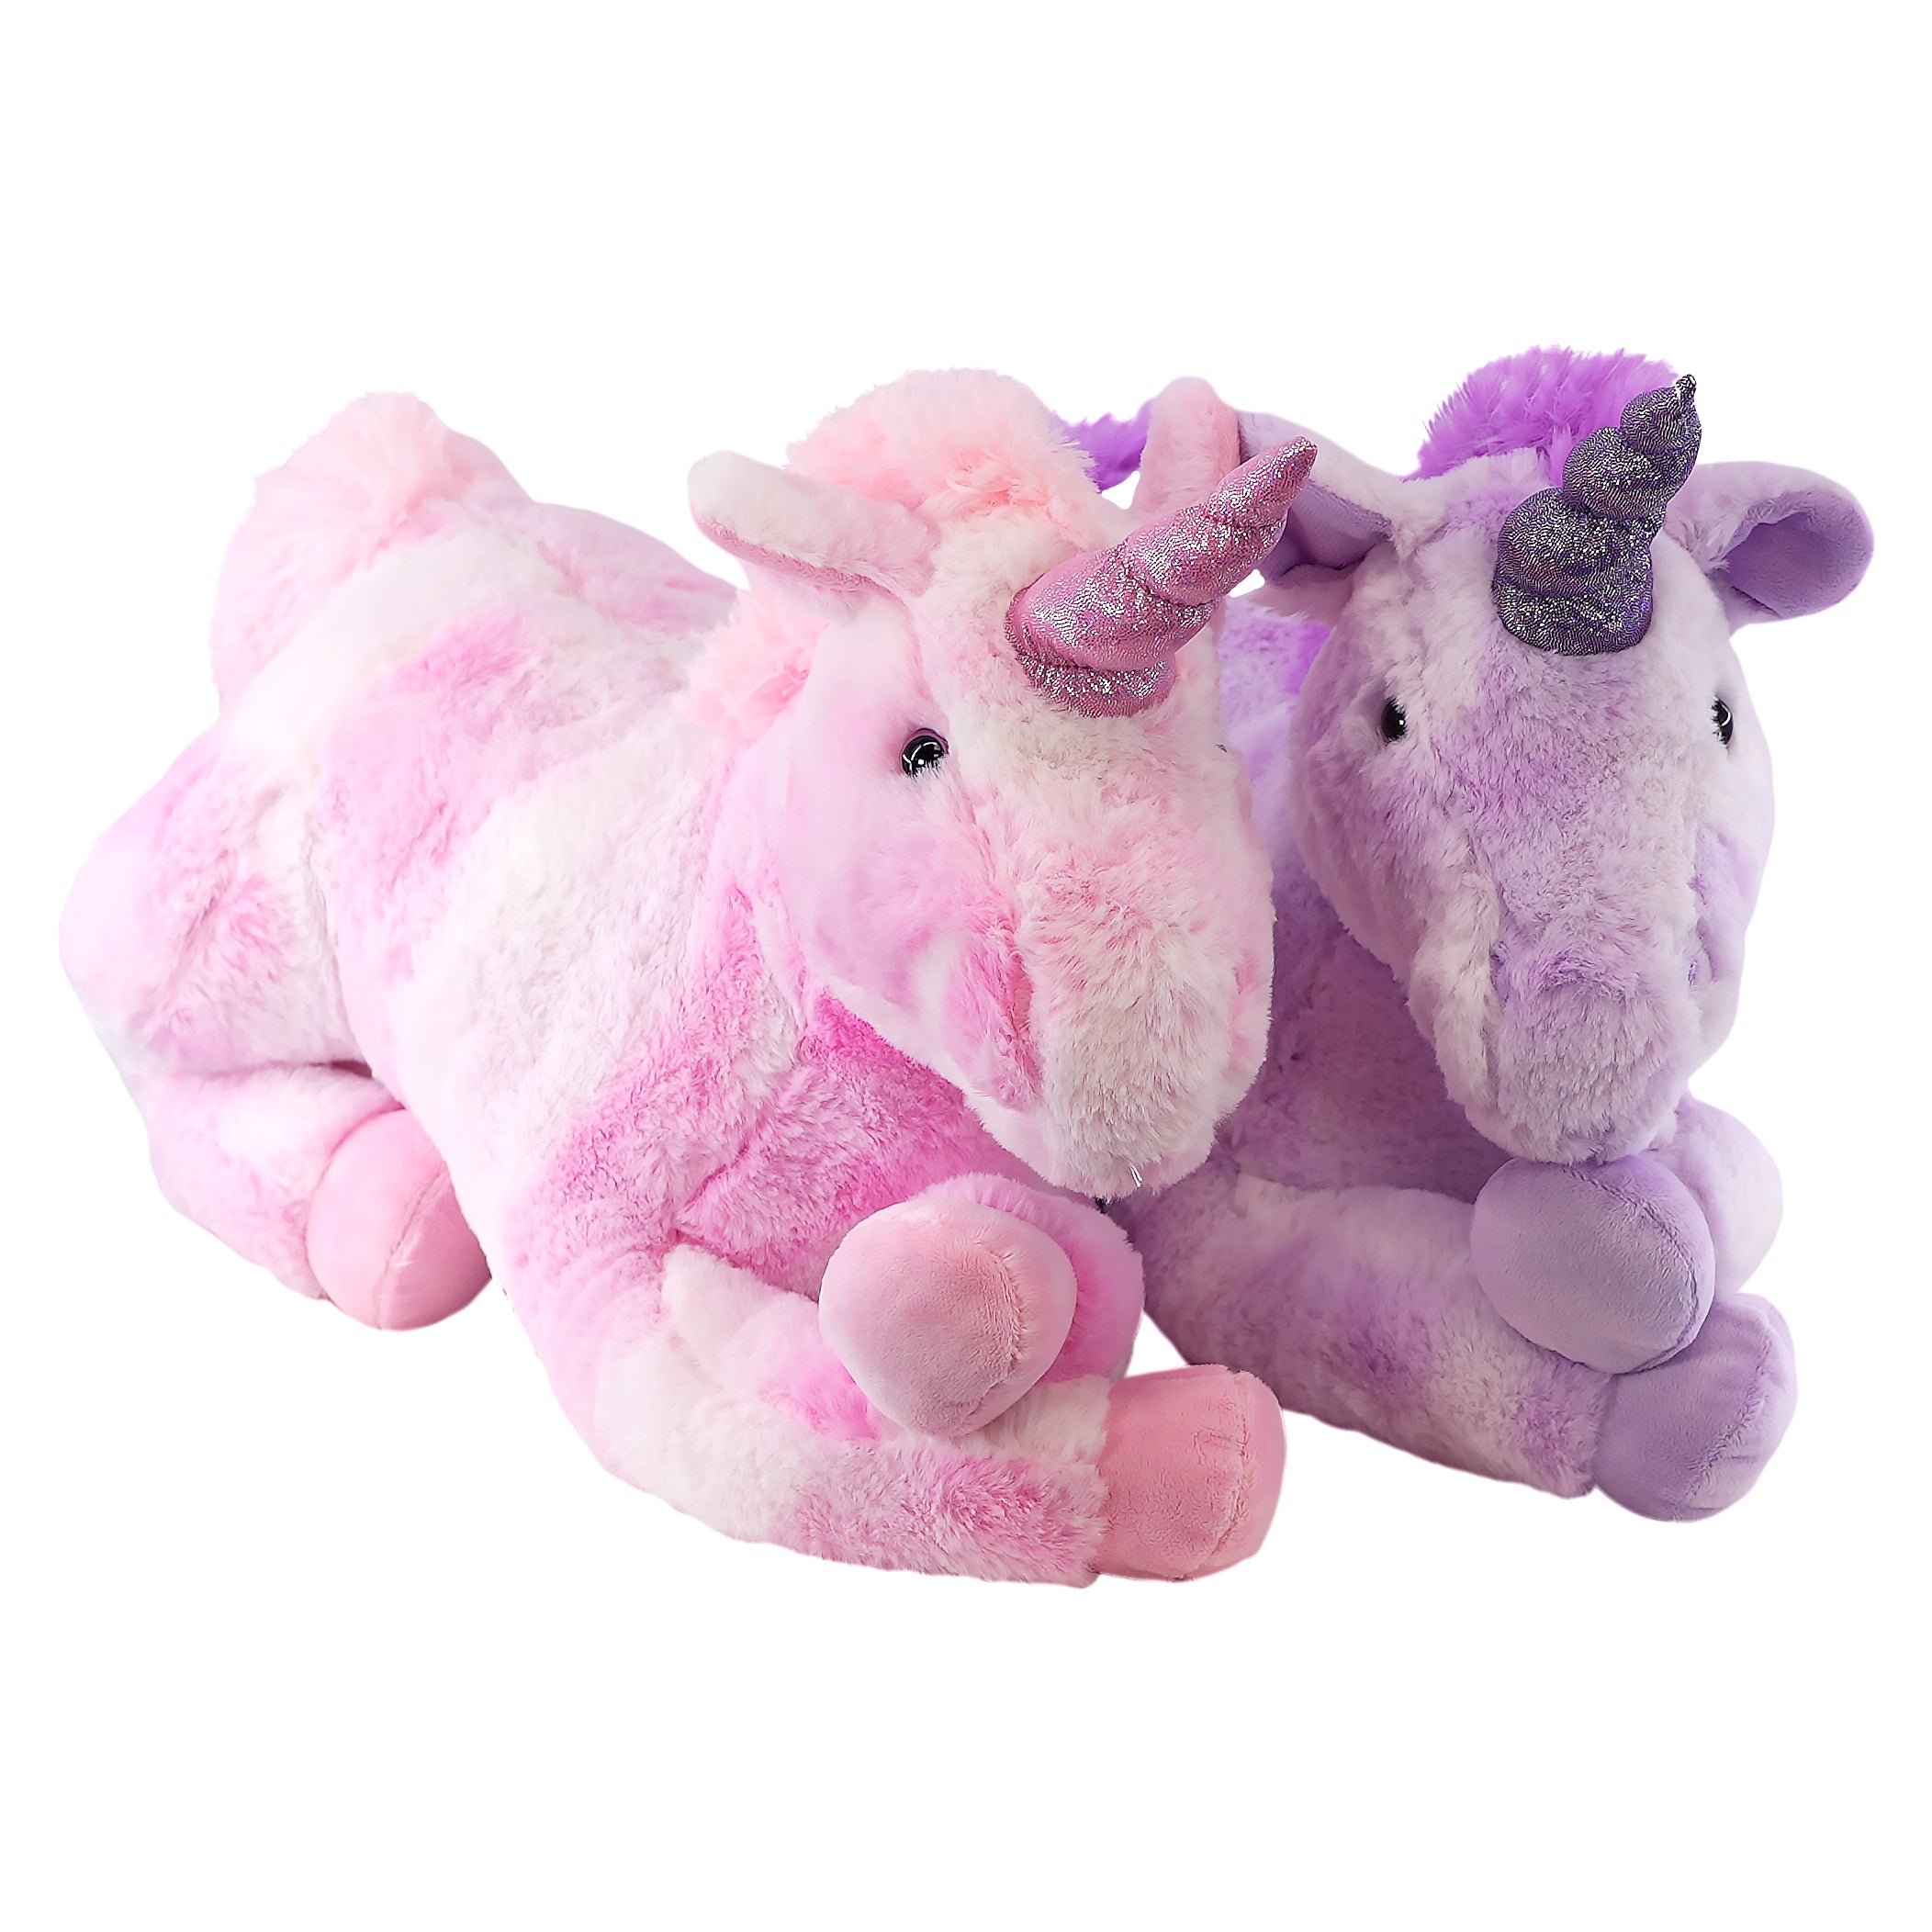 The Magic Toy Shop Soft Toy 21" Lying Soft Stuffed Unicorn